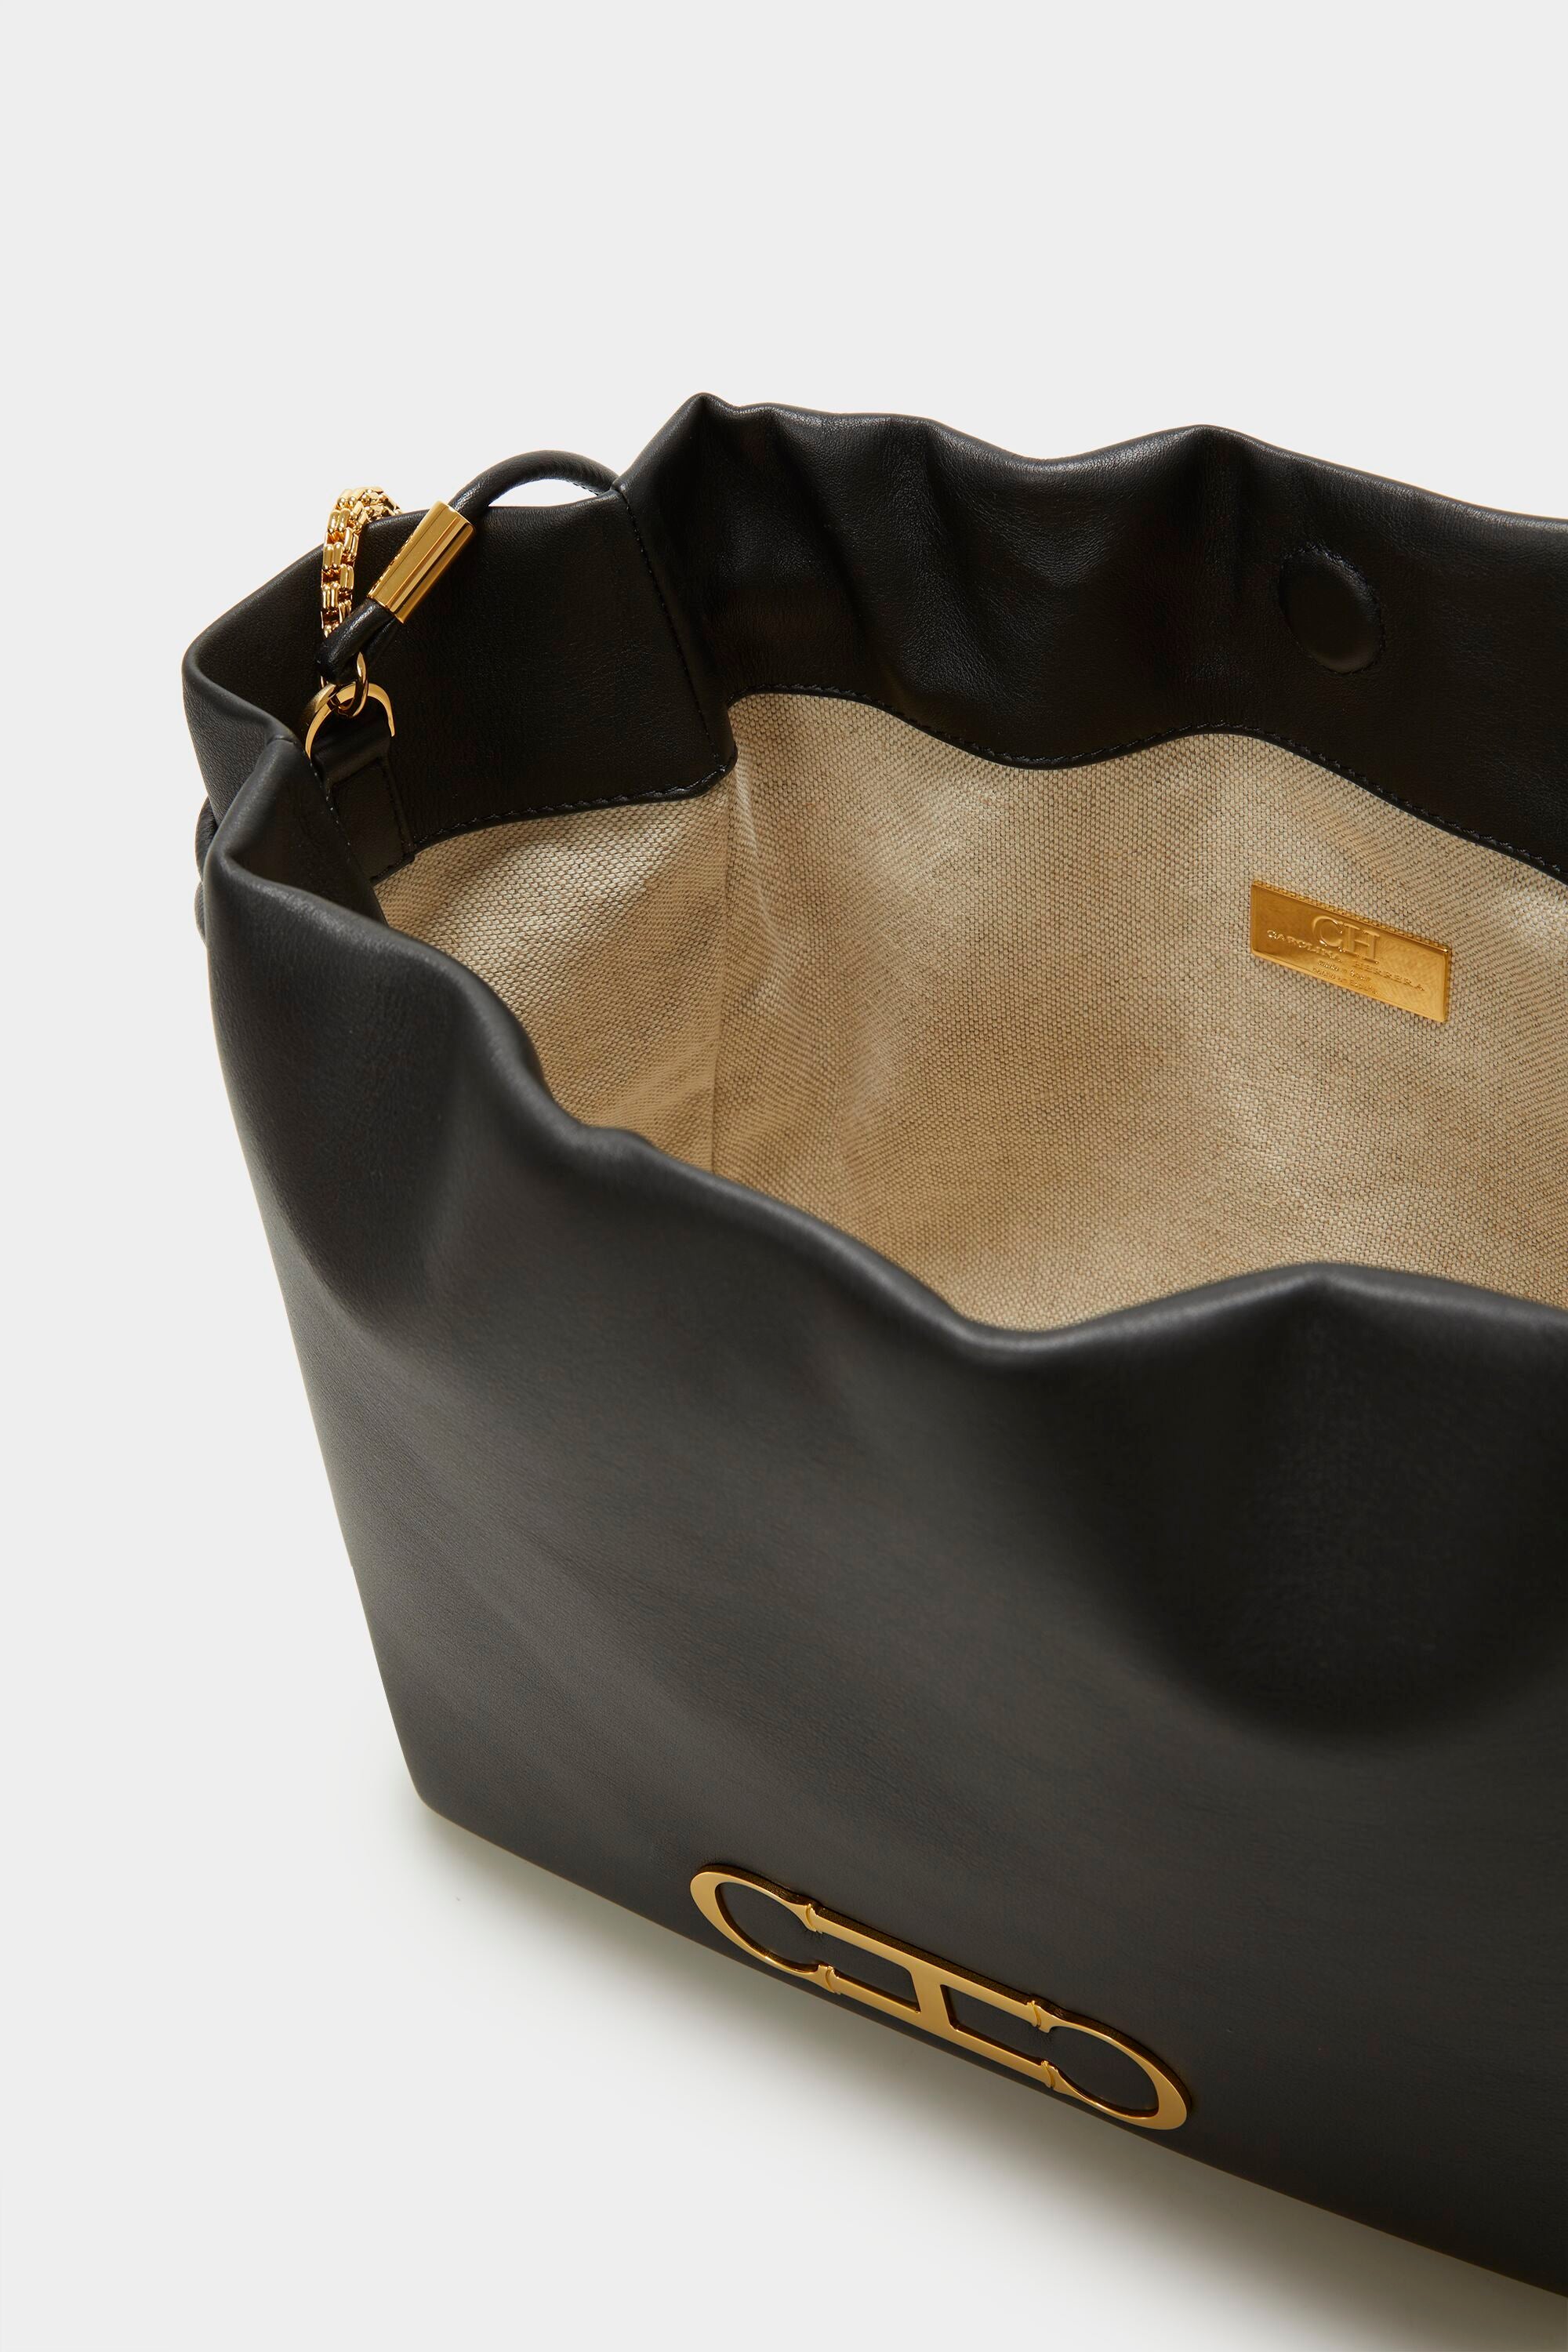 Bimba Soft  Medium shoulder bag black - CH Carolina Herrera United States